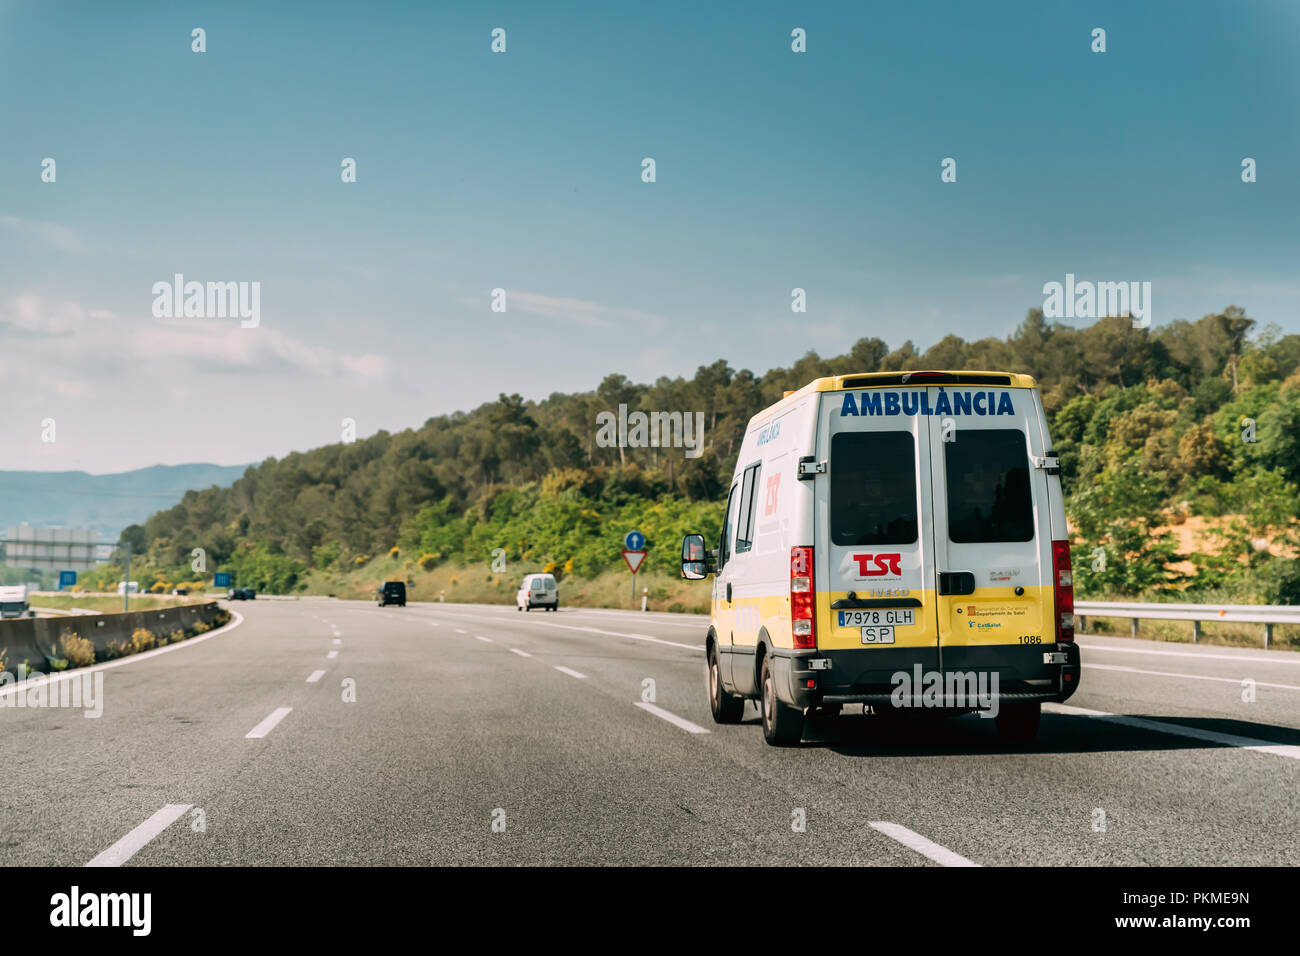 Vilafreser, Spain - May 18, 2018: Emergency Ambulance Van Iveco Car Moving On Spanish Motorway Road Stock Photo